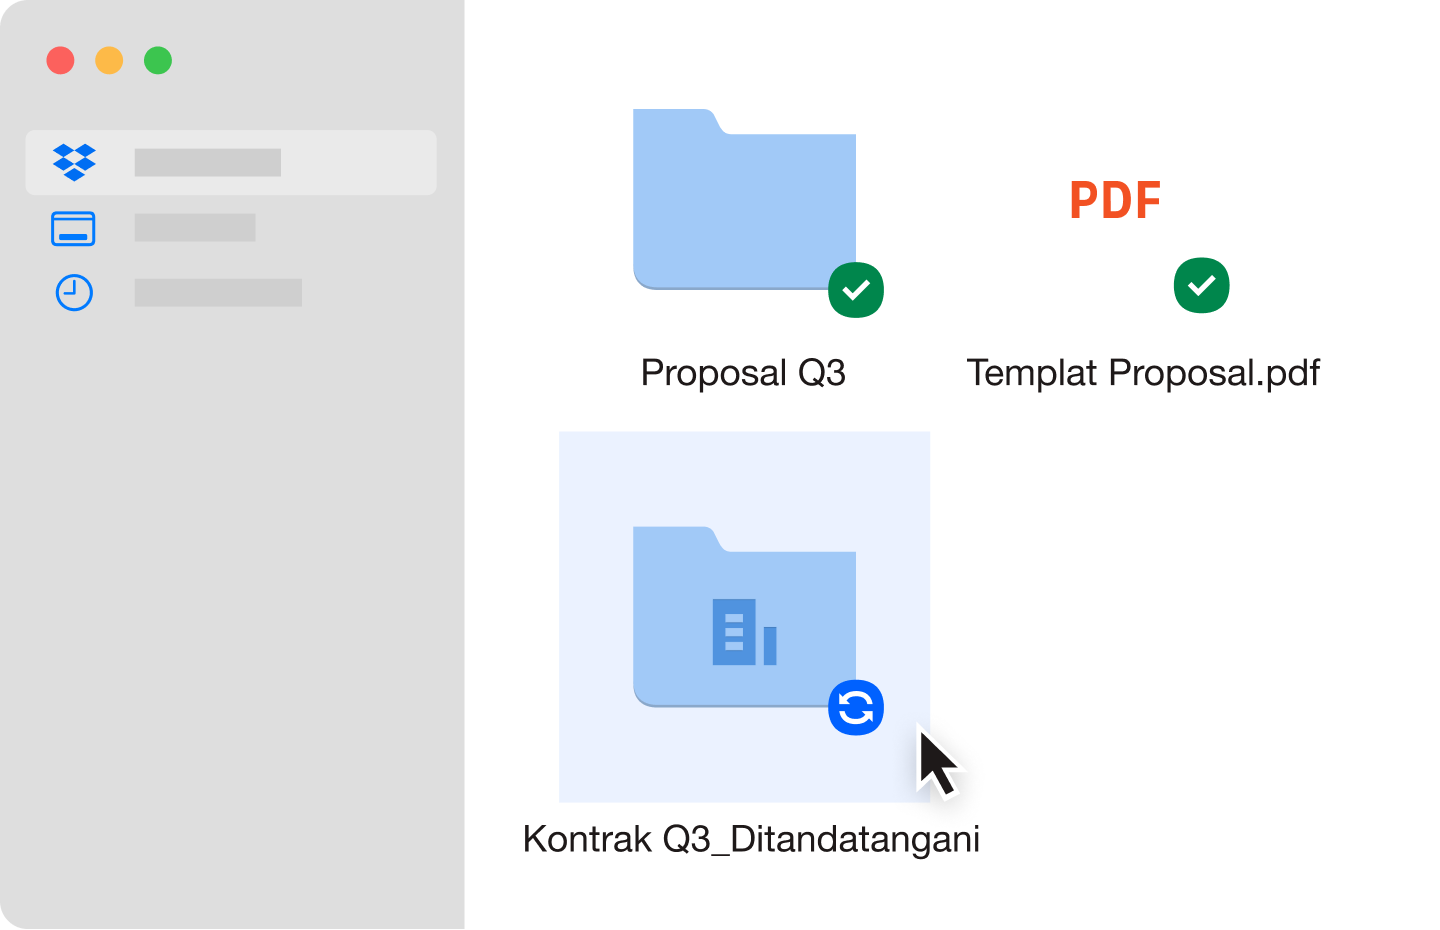 Dua folder file biru dan file PDF yang telah disinkronkan di akun Dropbox